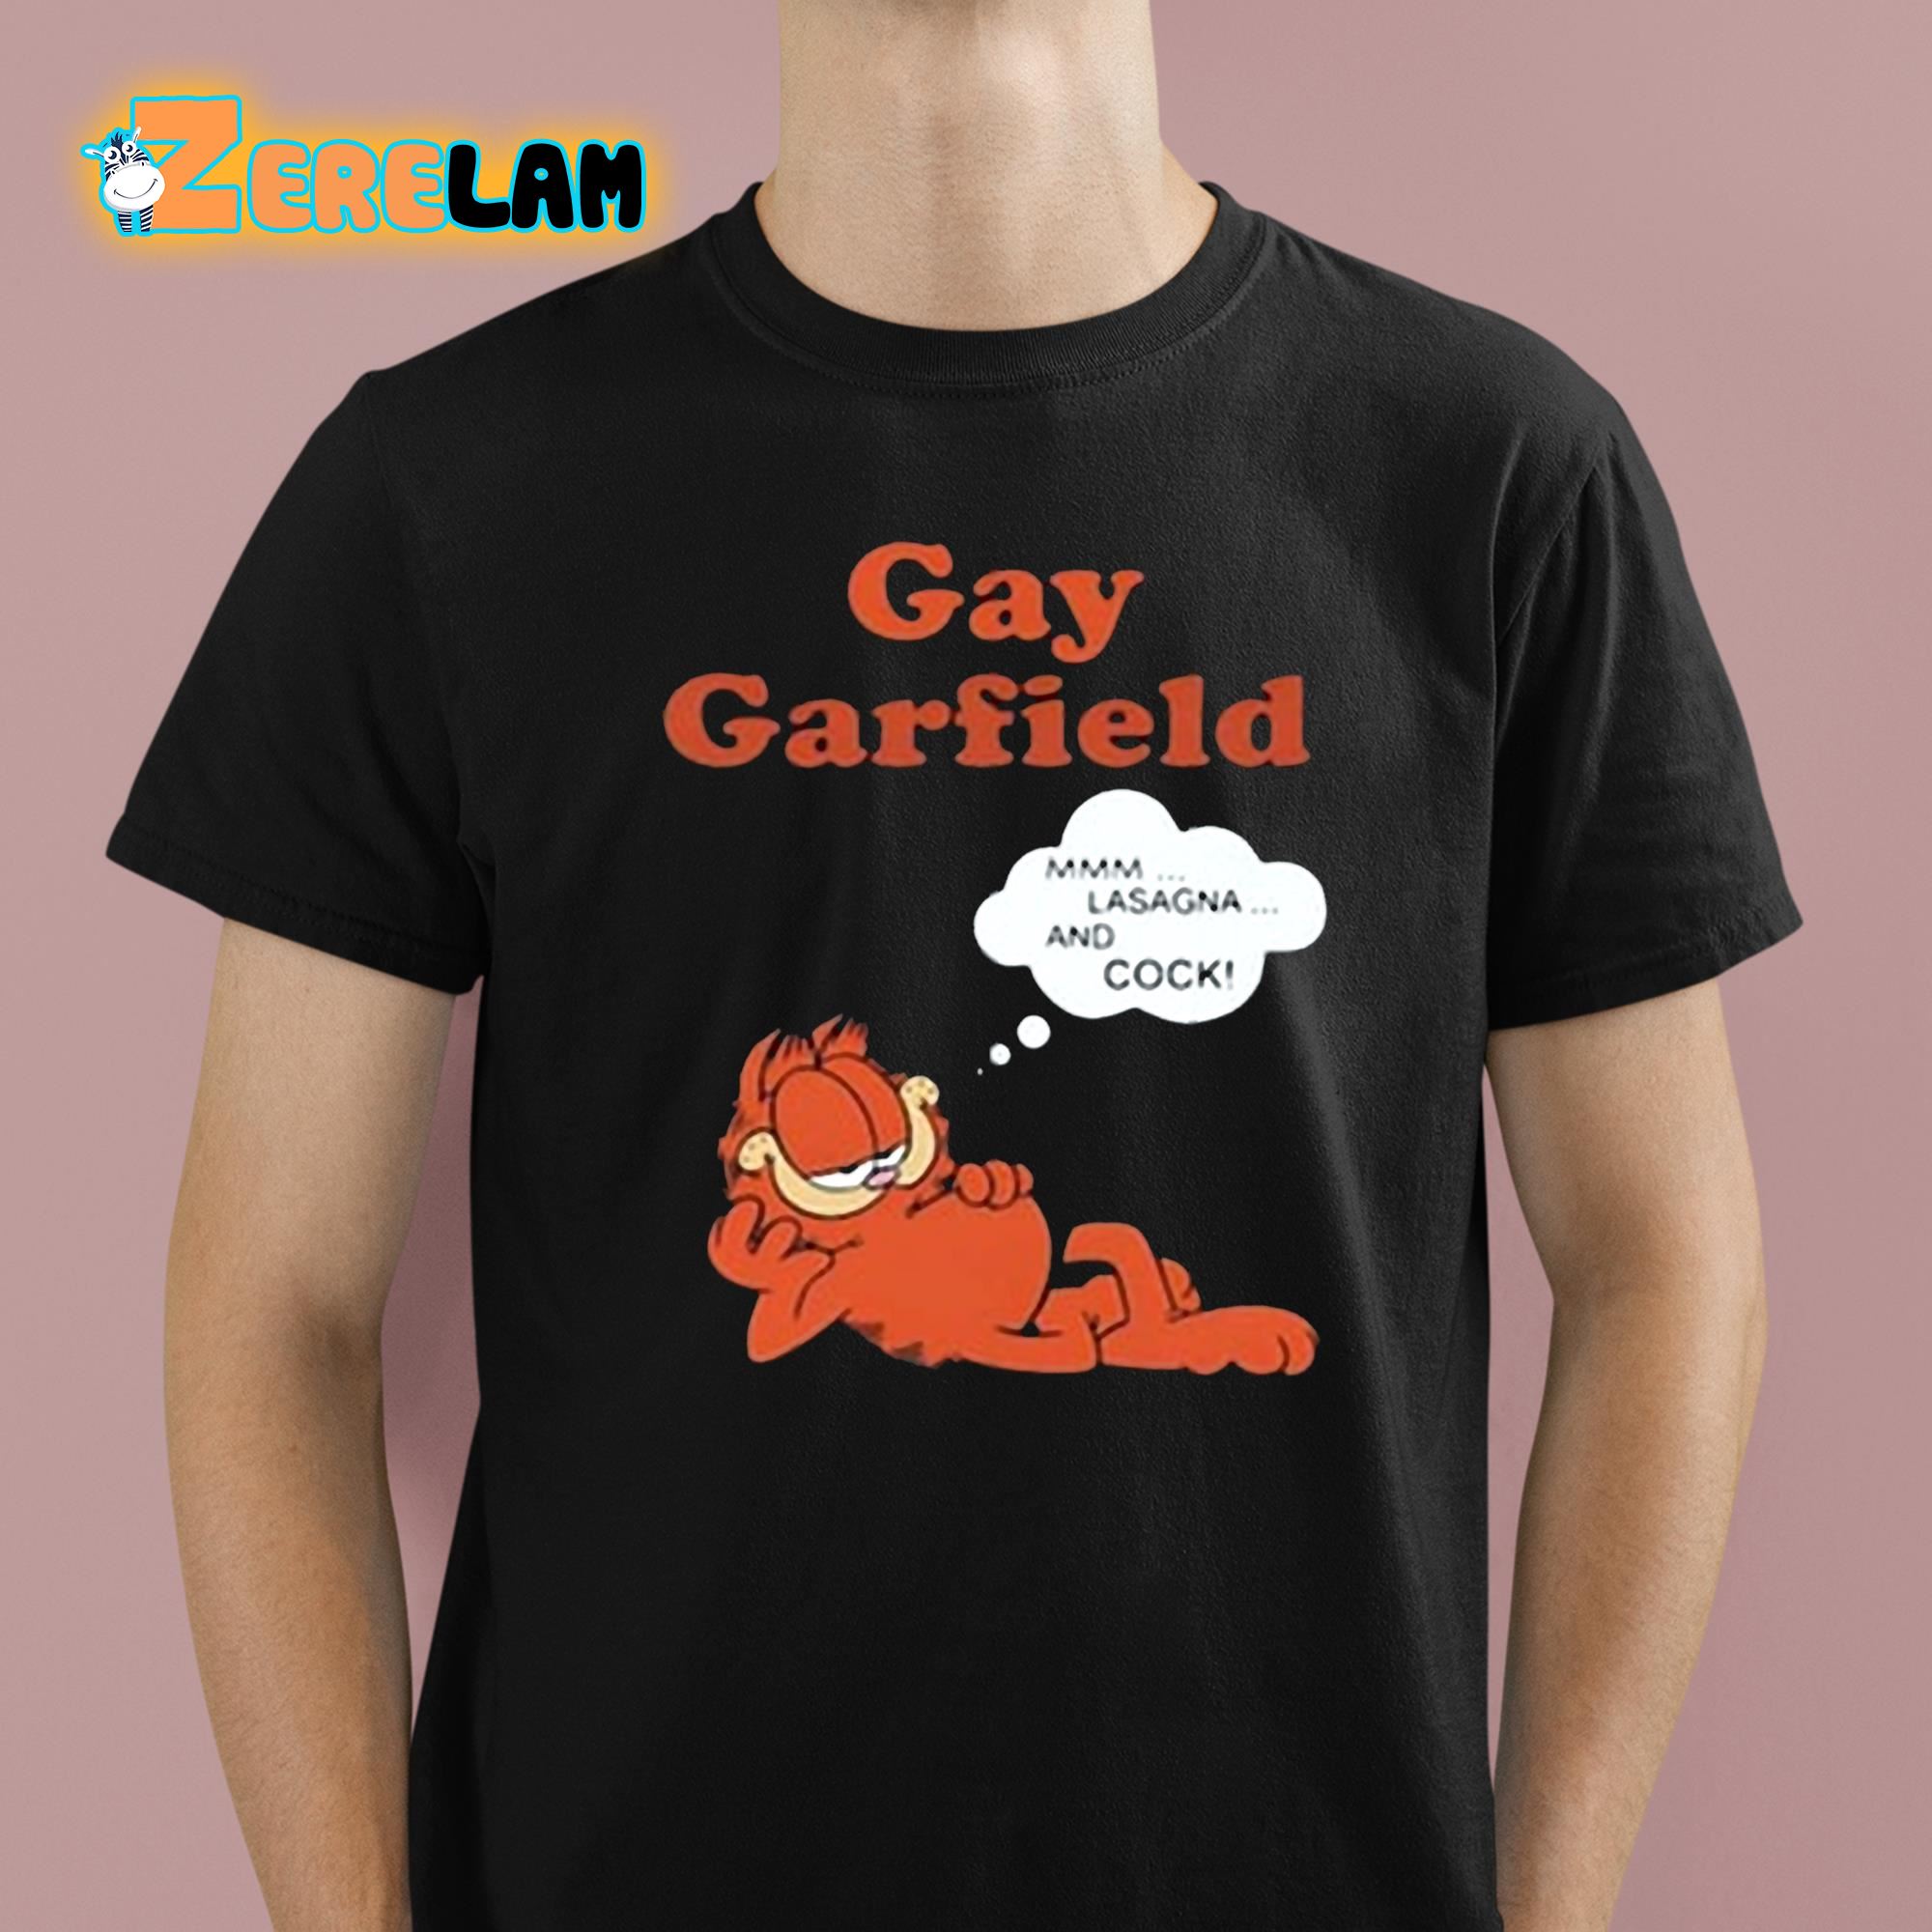 Funny Gay Garfield Cat Shirt 1 1